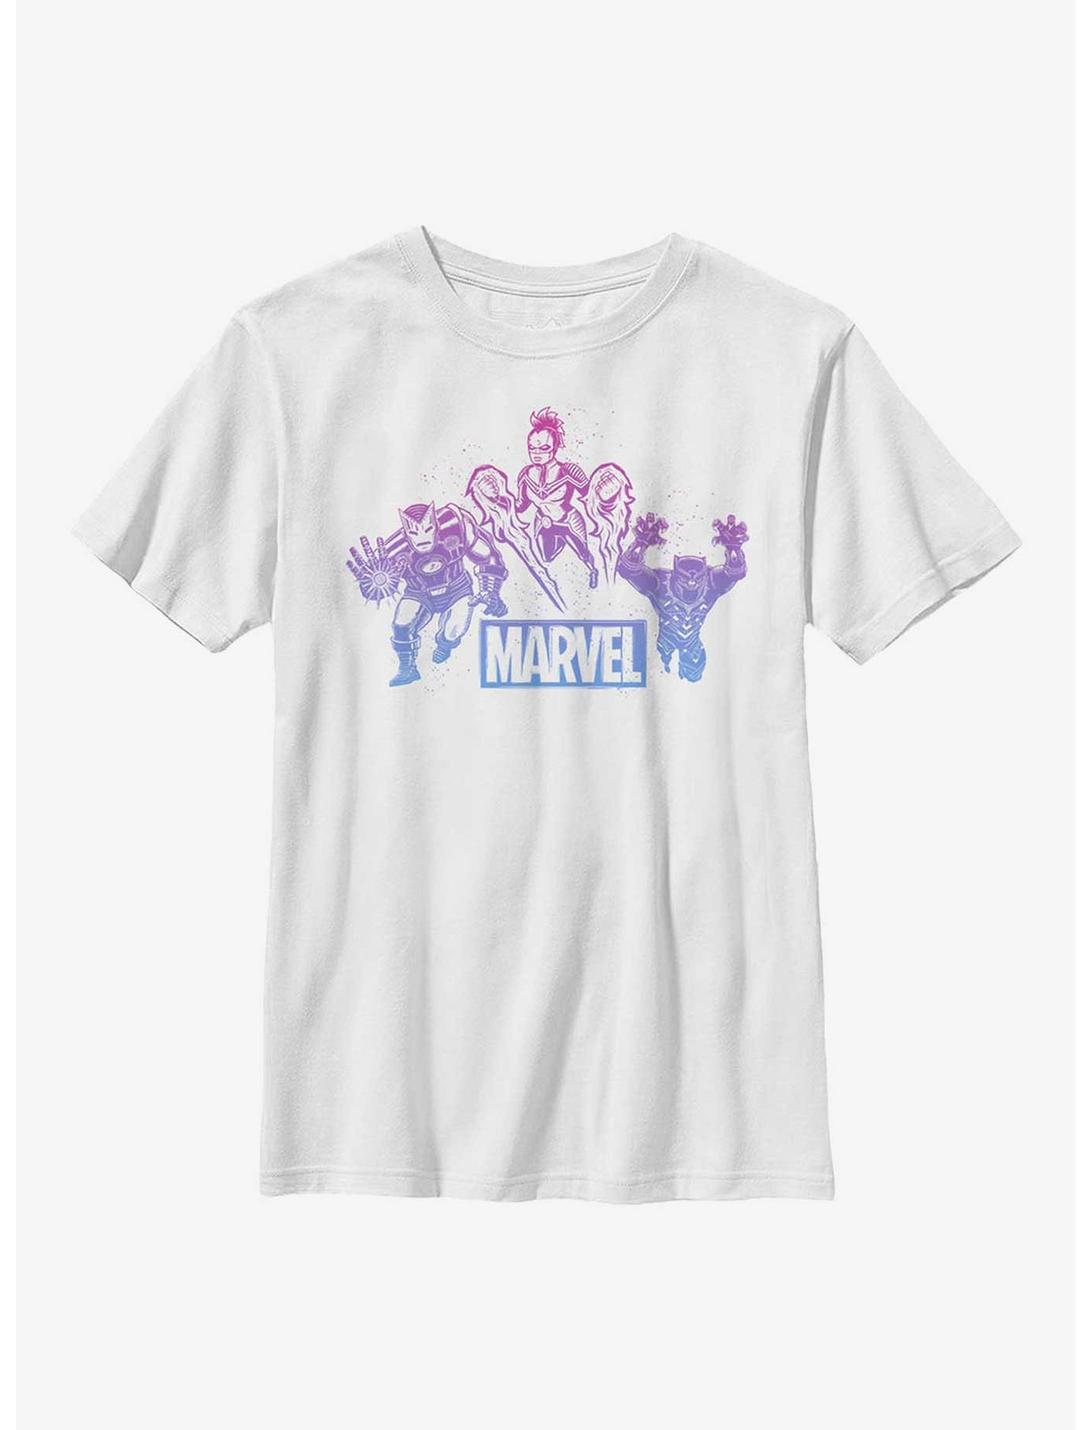 Marvel Avengers Gradient Group Youth T-Shirt, WHITE, hi-res